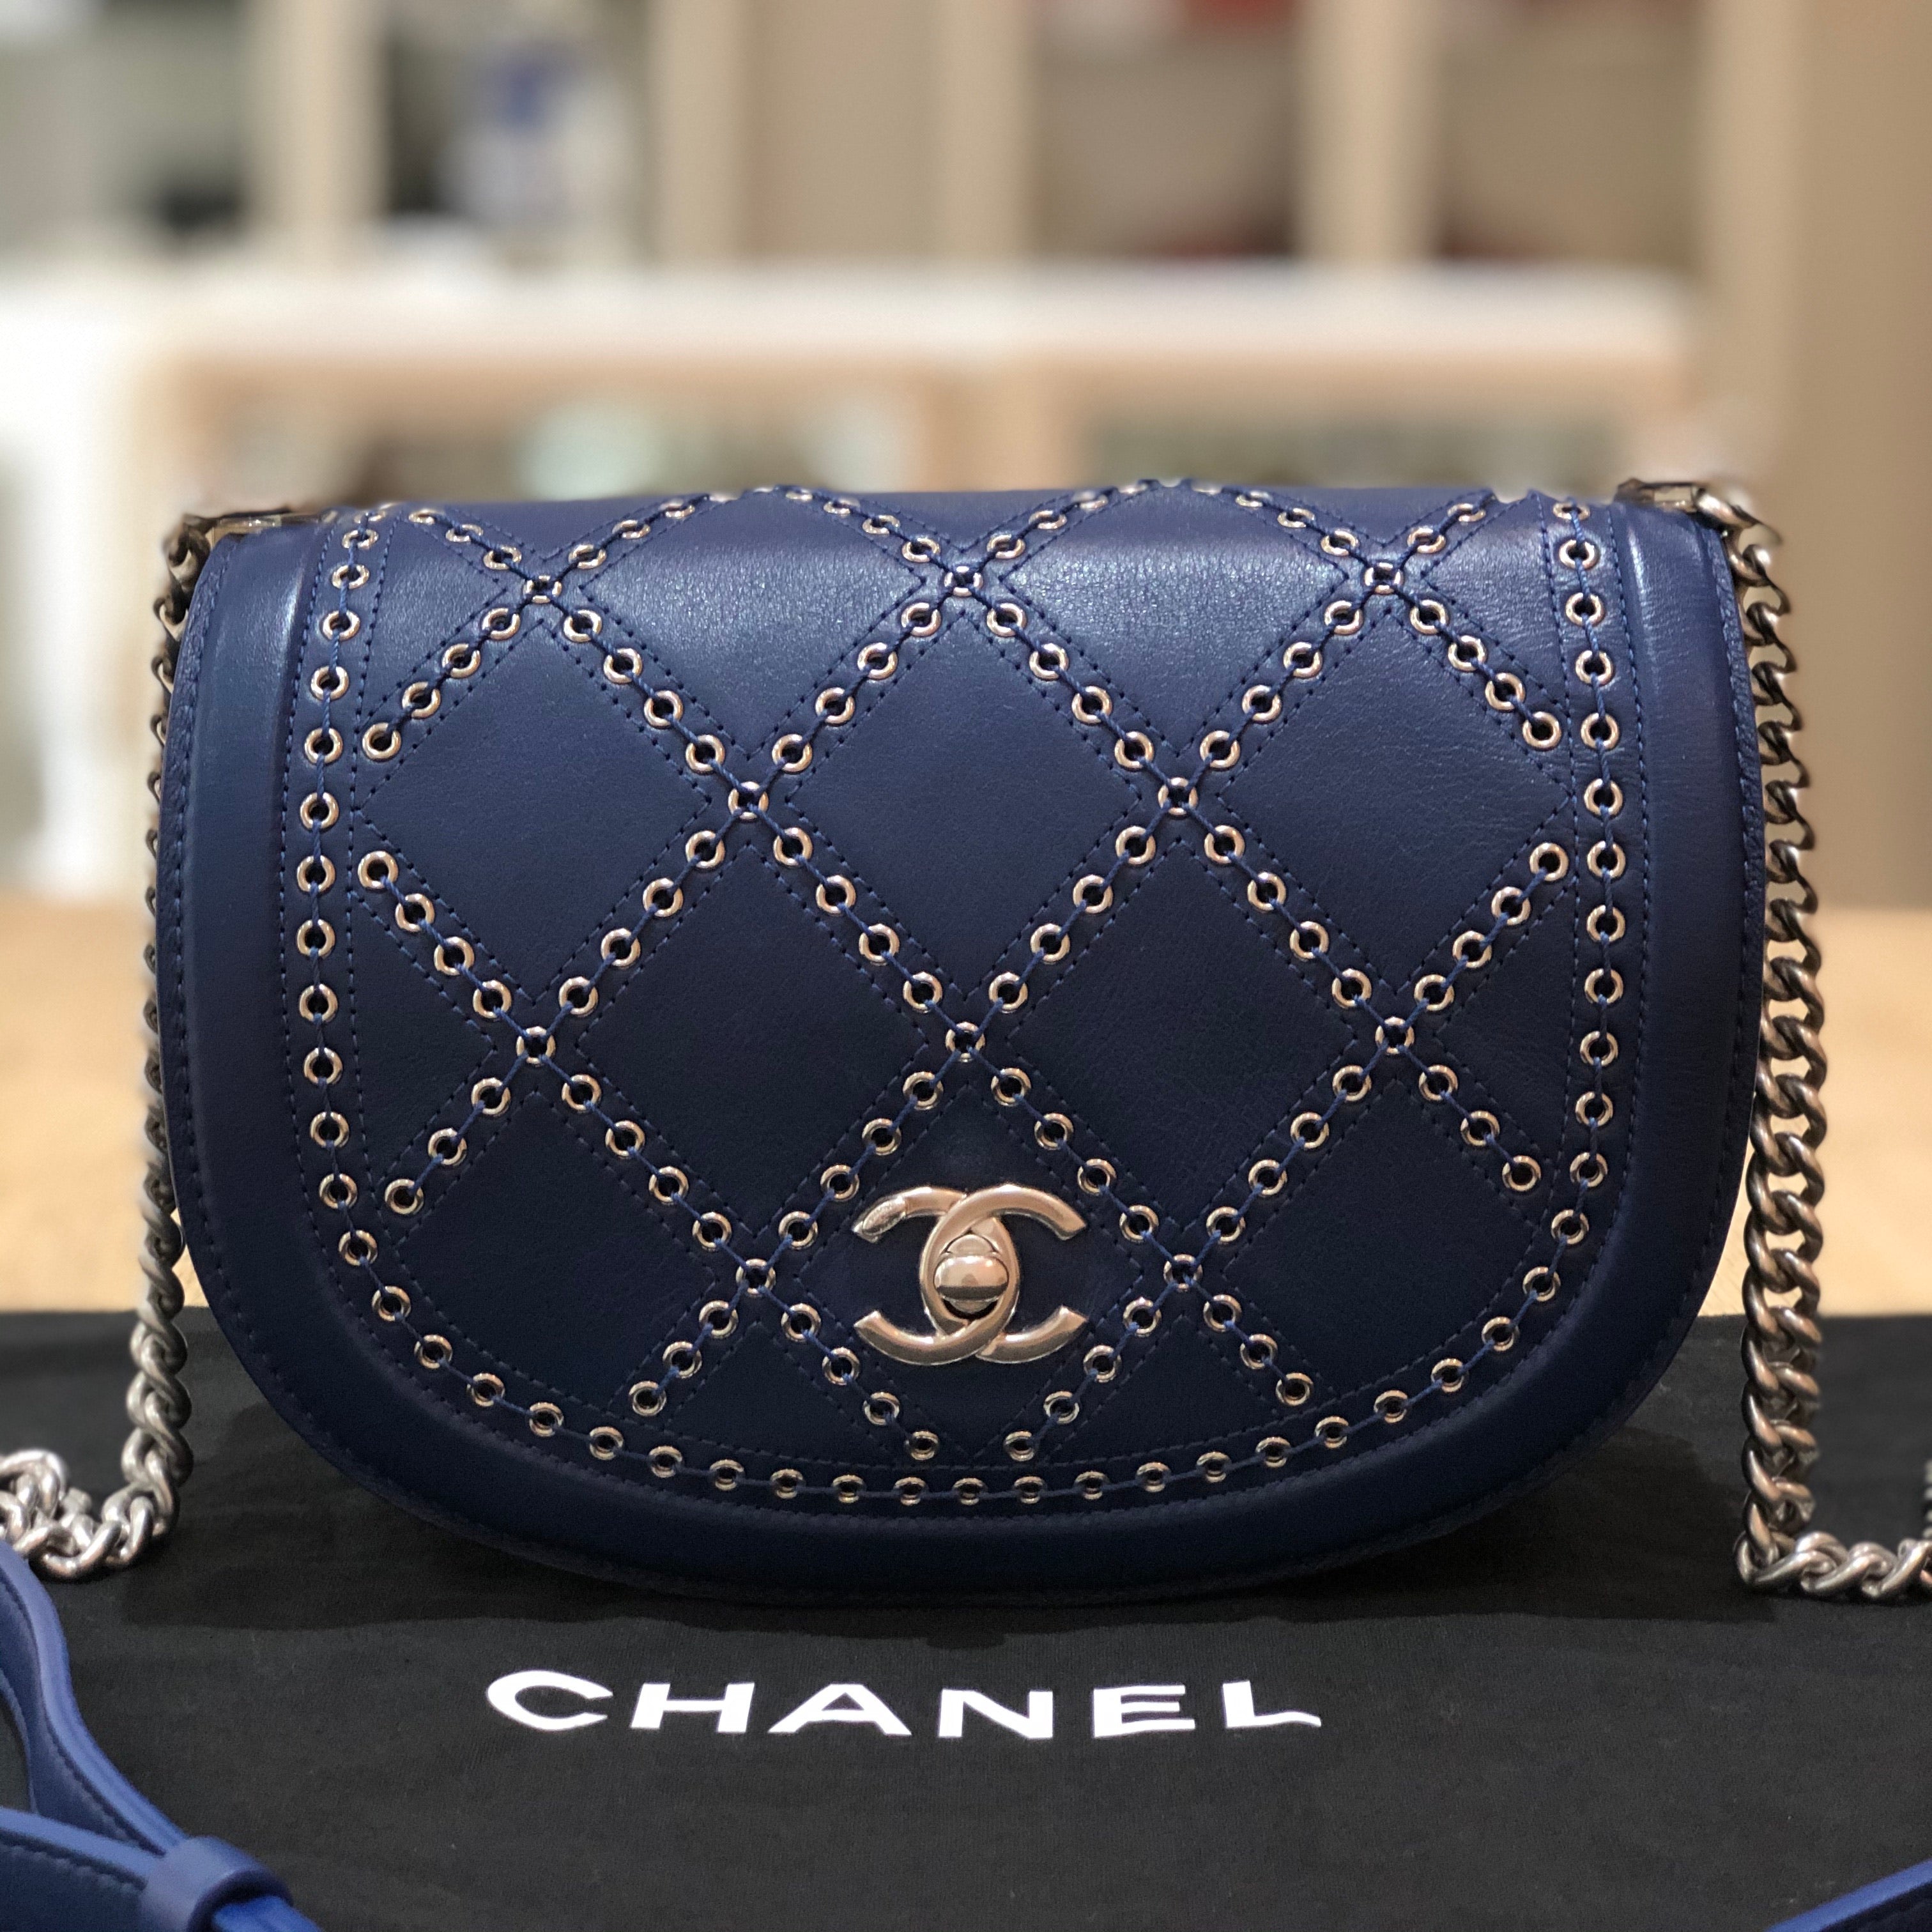 Chanel Coco eyelet flap bag